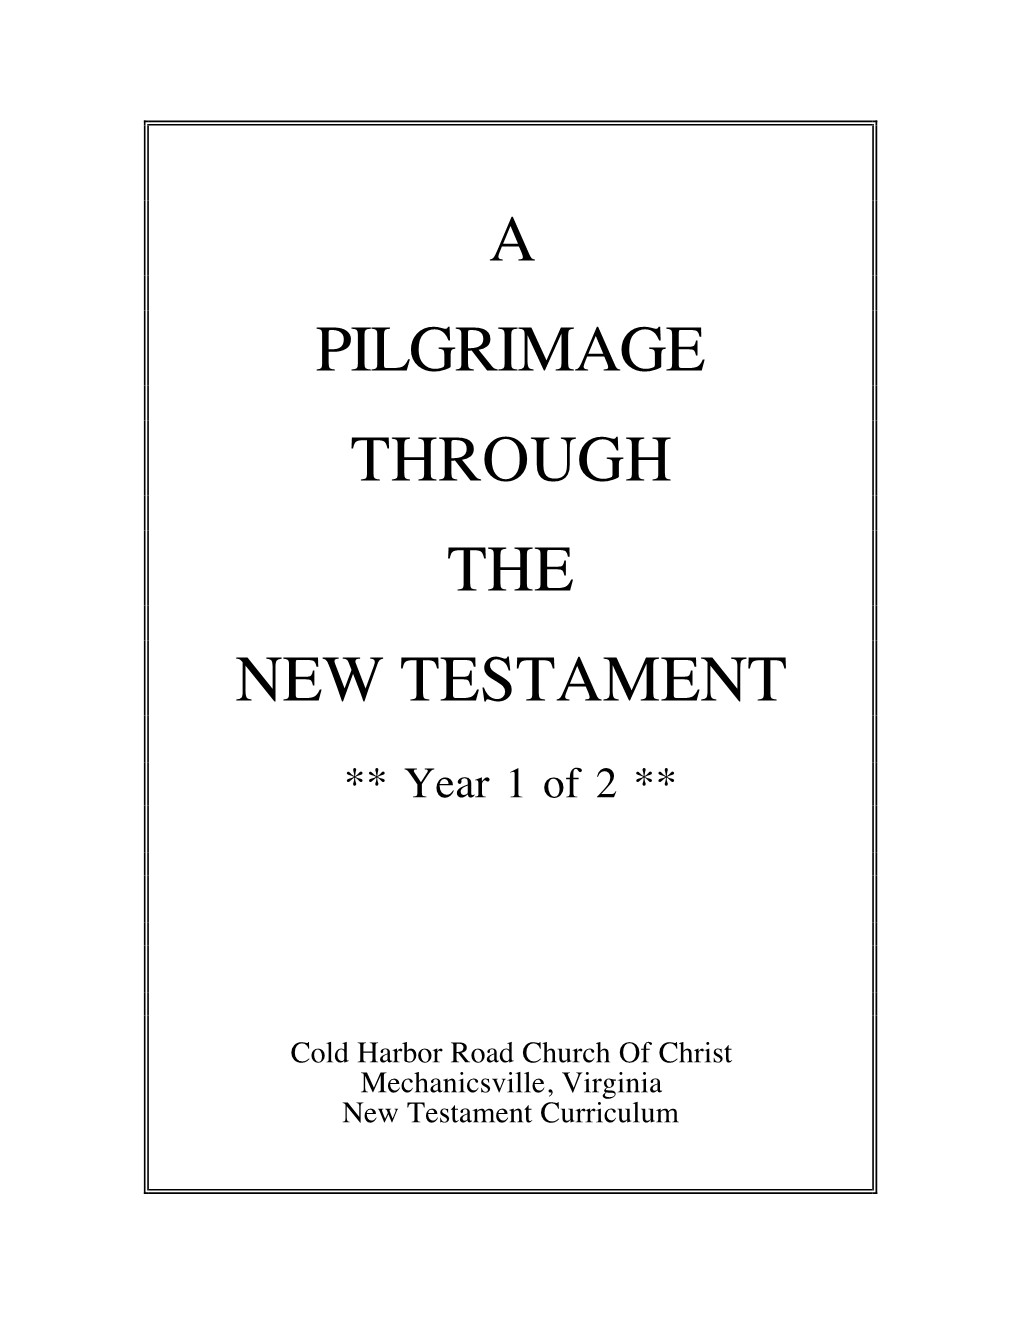 A Pilgrimage Through the New Testament